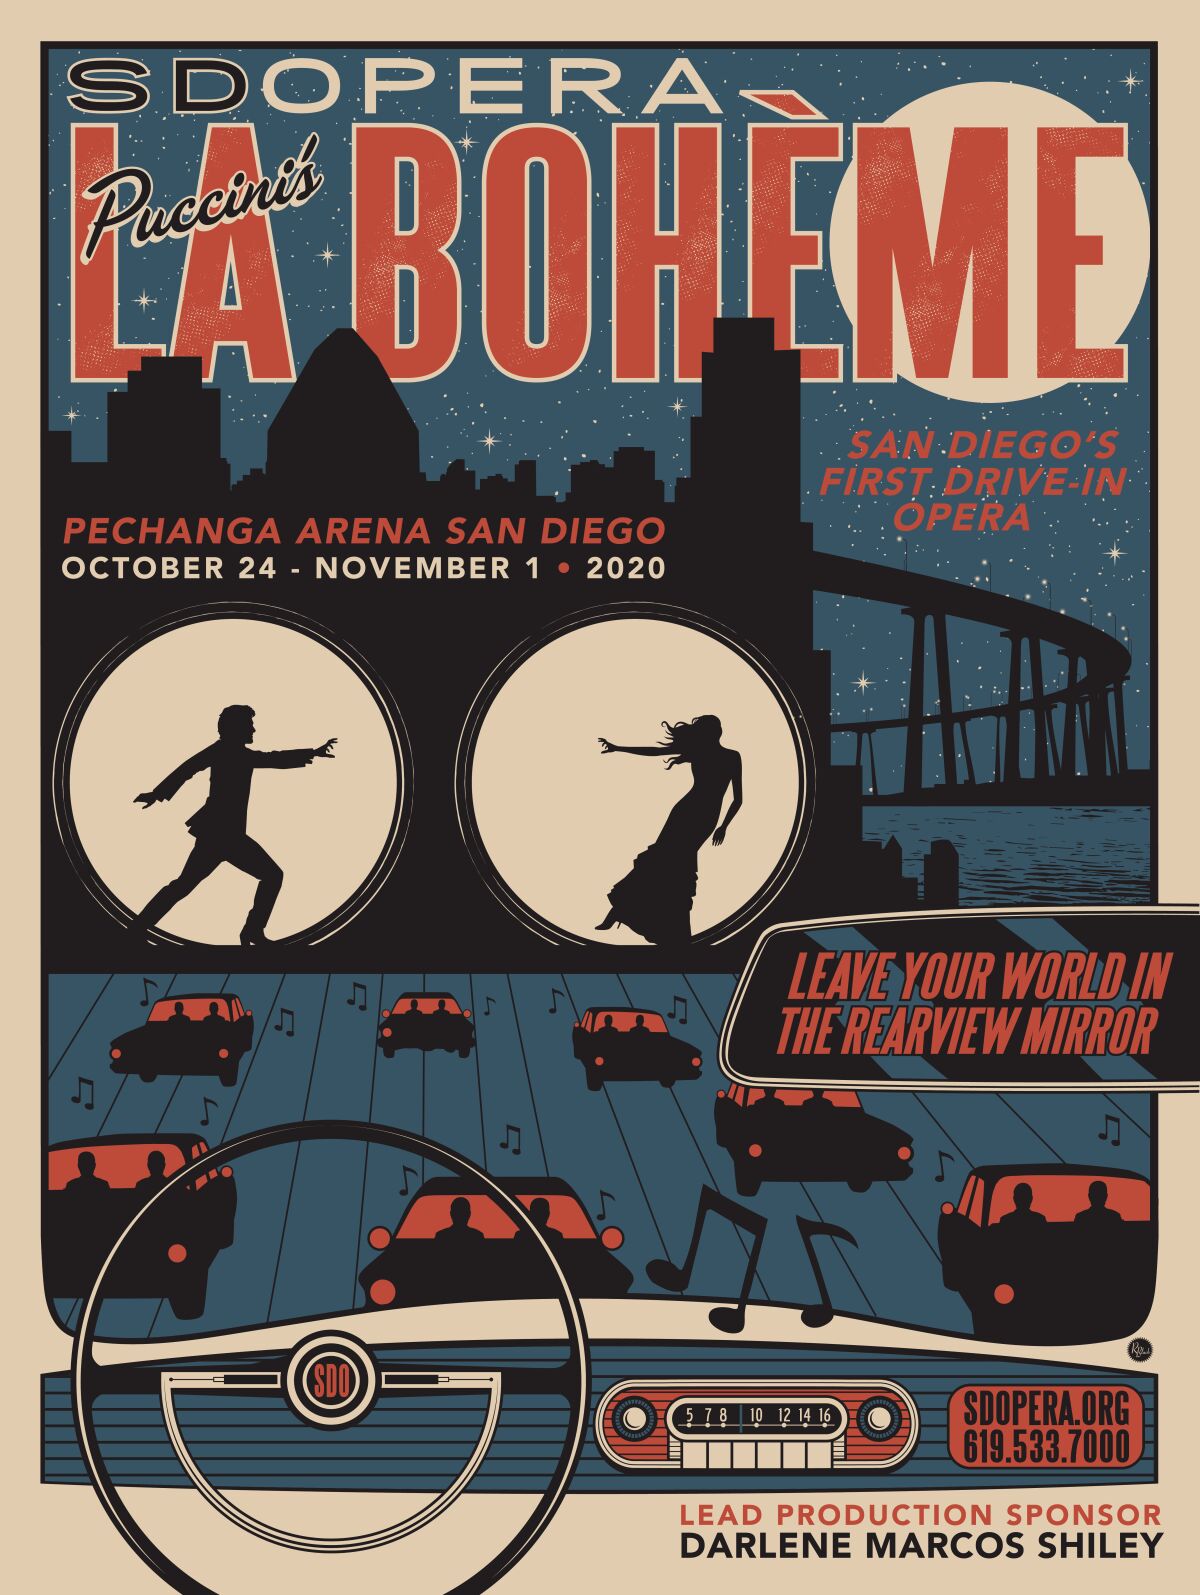 The San Diego Opera will present “La Bohème” Oct. 24, 27, 30 and Nov. 1 at the Pechanga Arena parking lot.